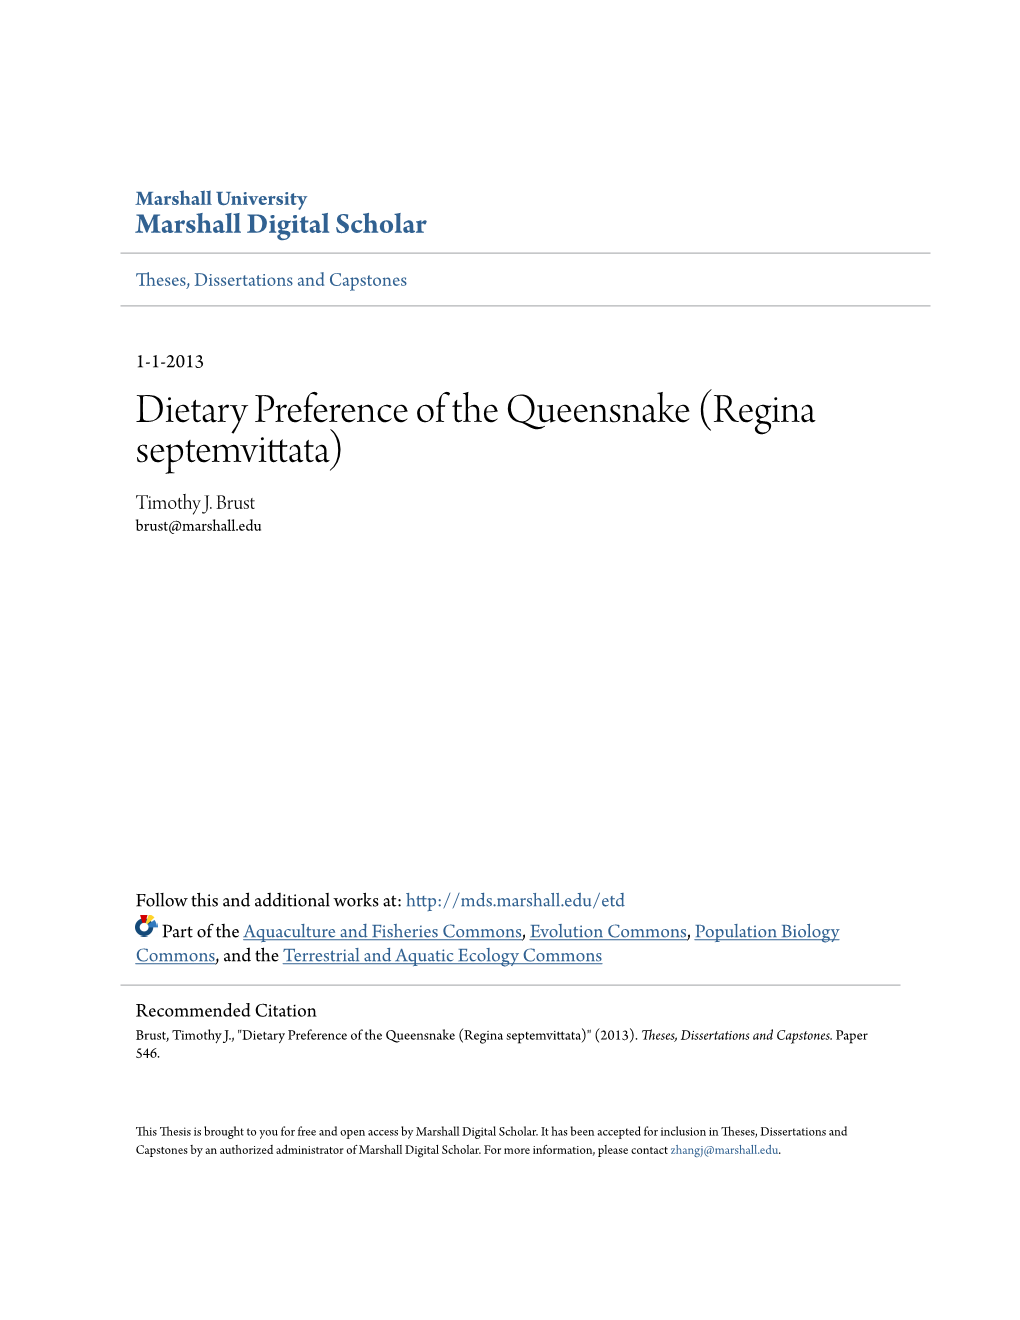 Dietary Preference of the Queensnake (Regina Septemvittata) Timothy J